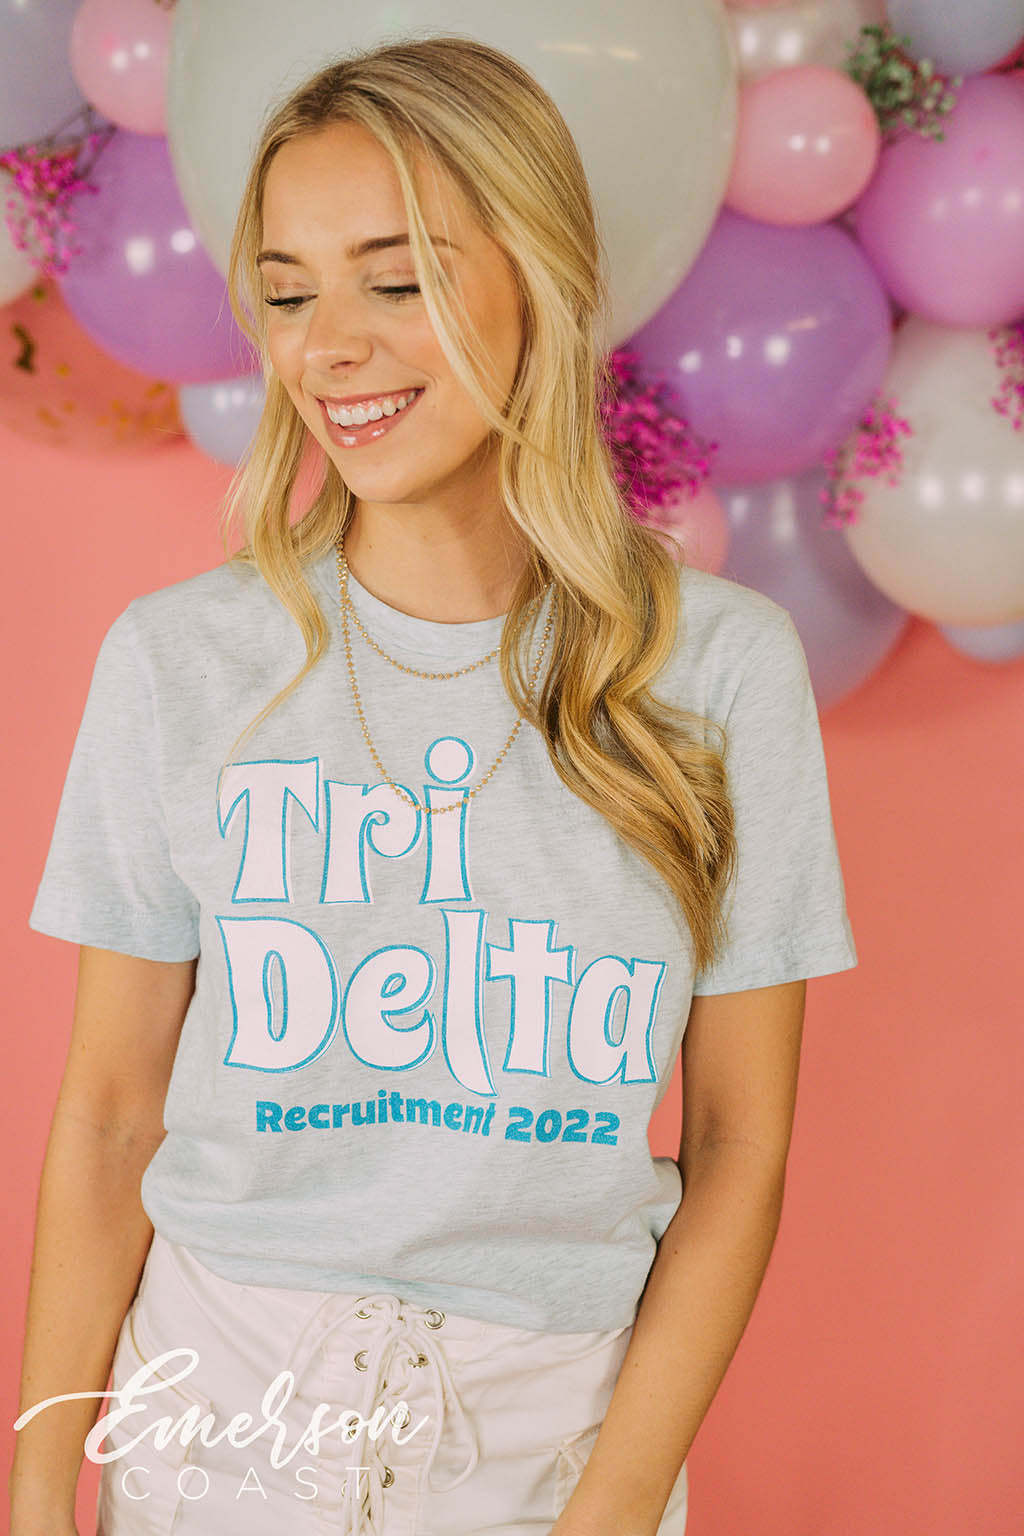 Tri Delta Blue Recruitment Shirt